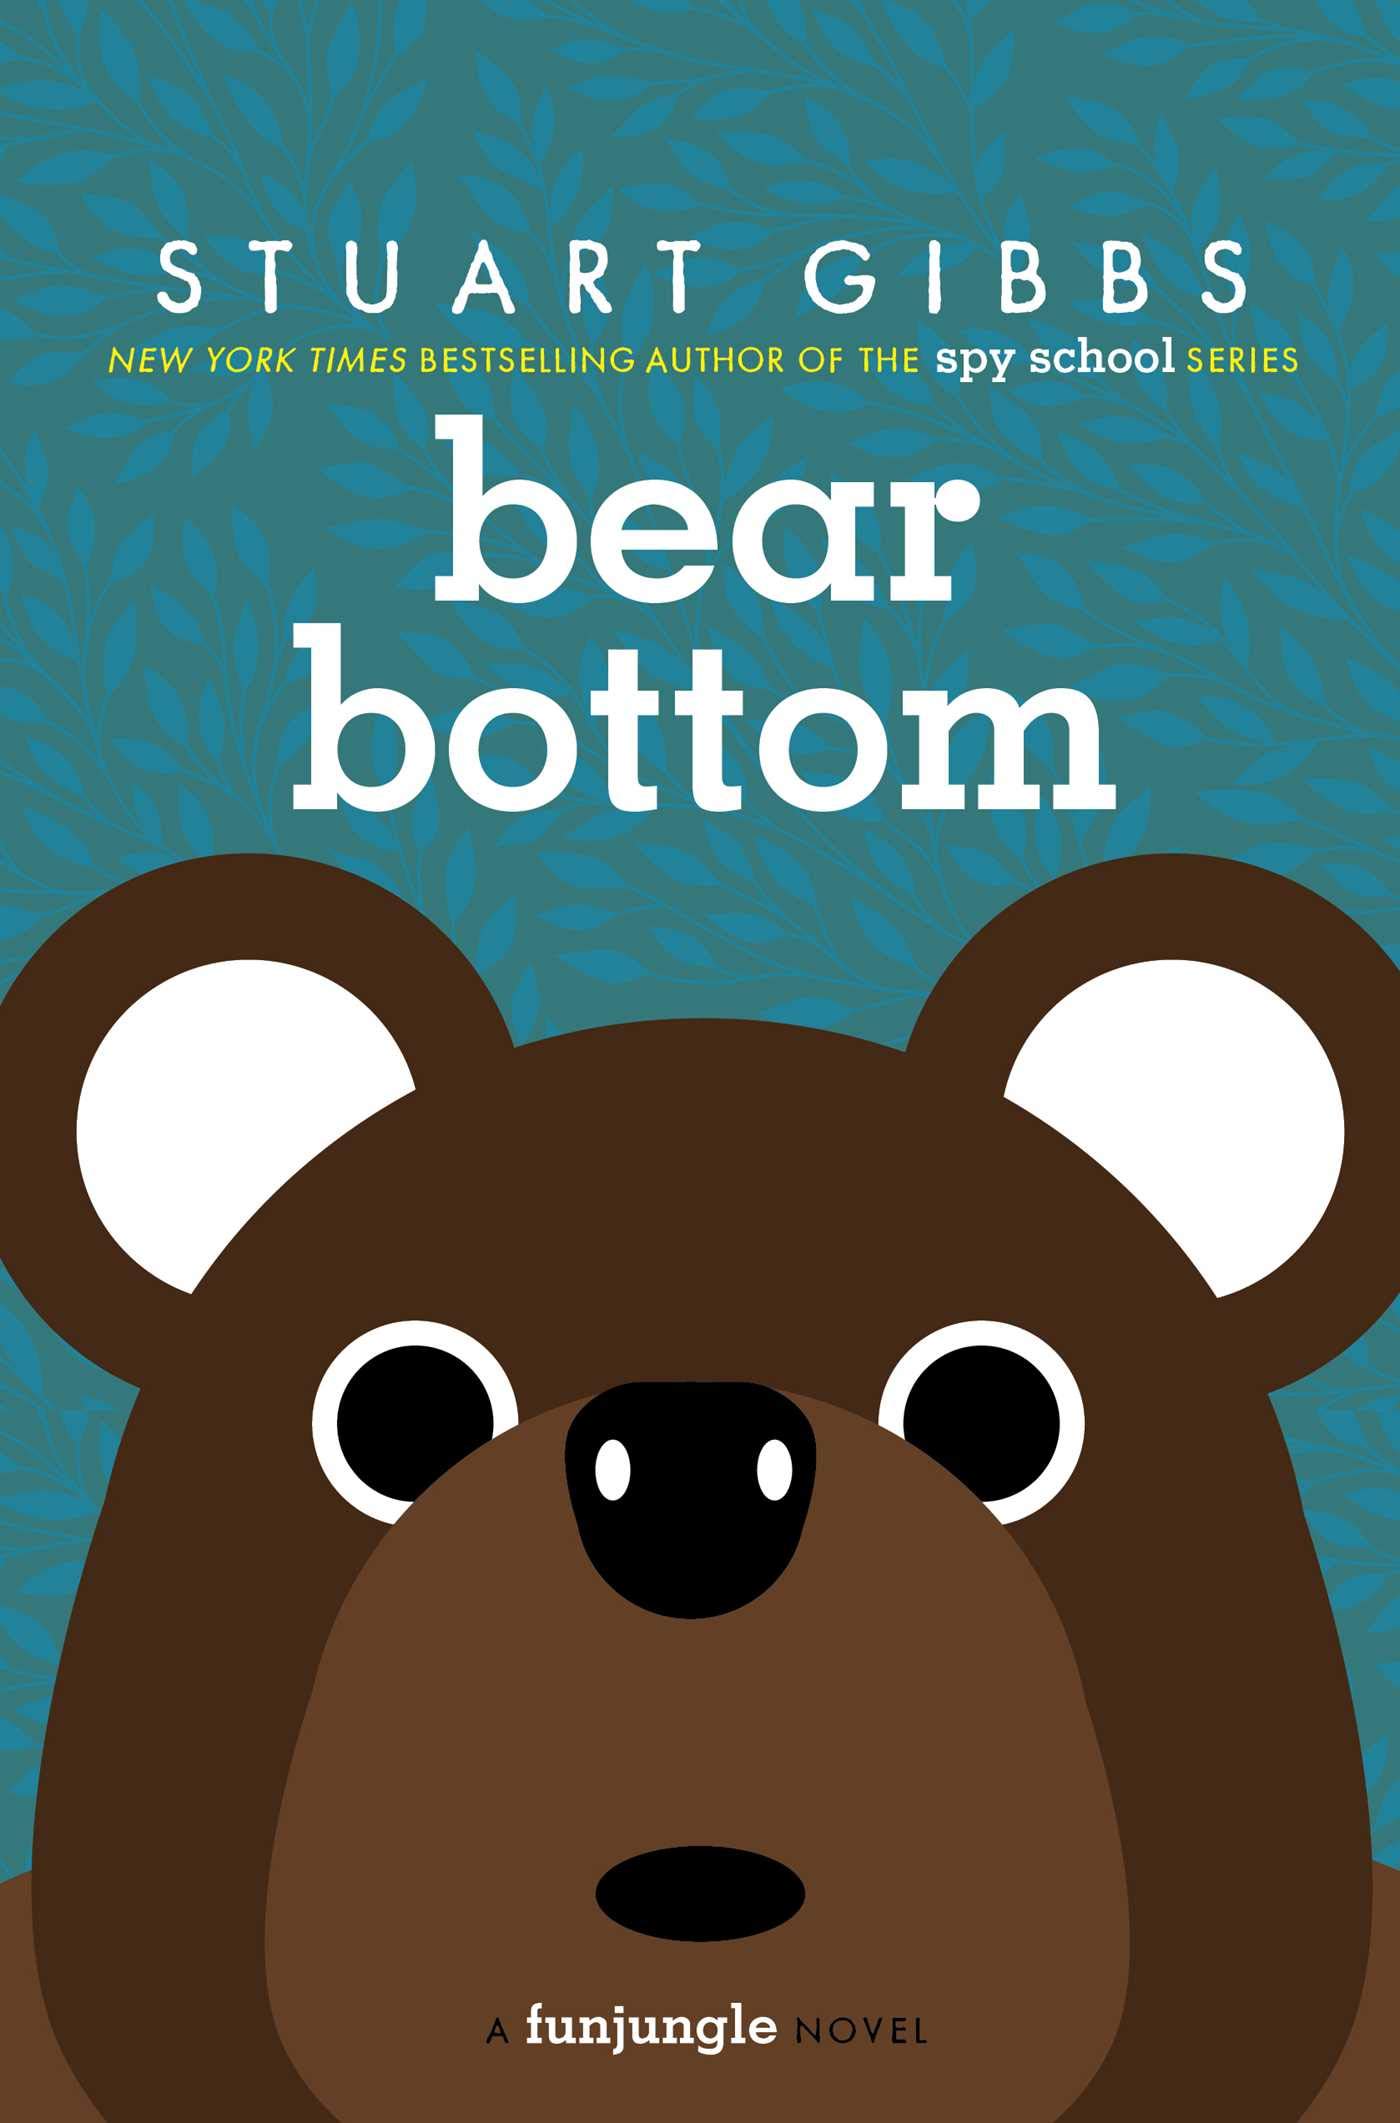 Bear Bottom (FunJungle #7) by Stuart Gibbs